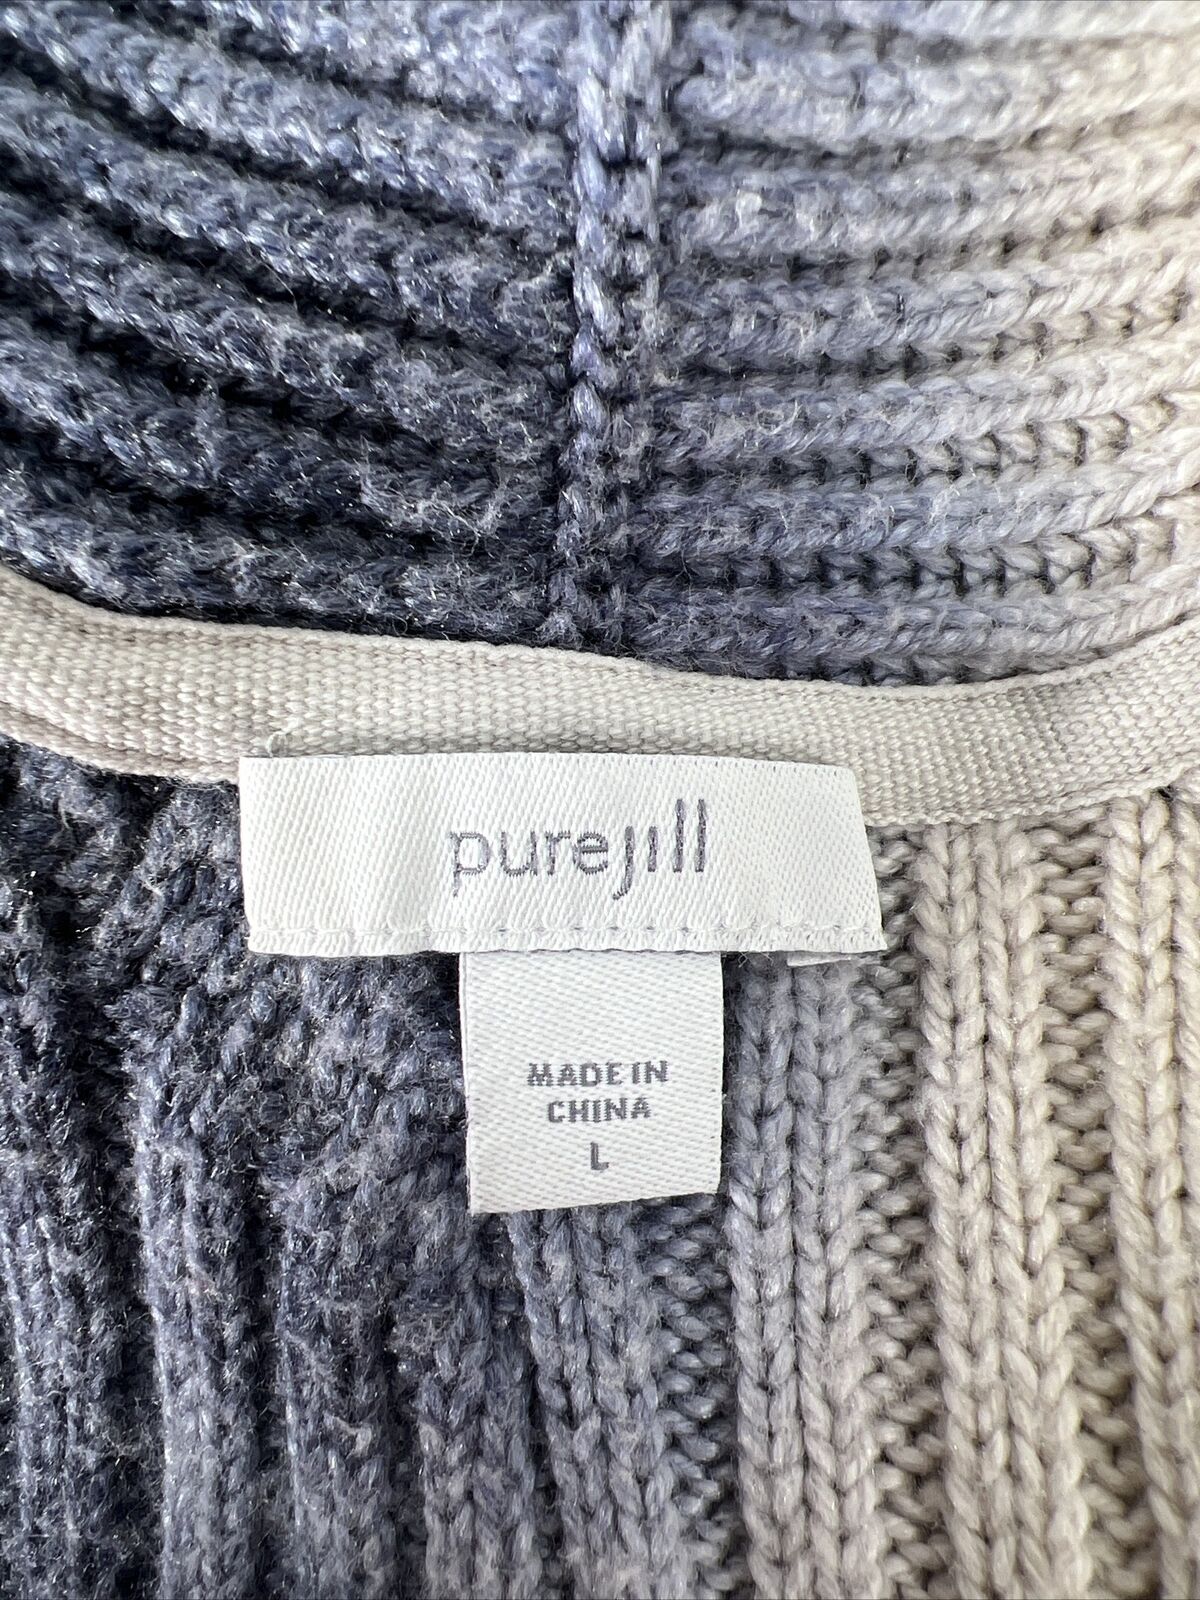 J. Jill Women's Pure Ivory/Blue Cable Knit Cardigan Sweater - L